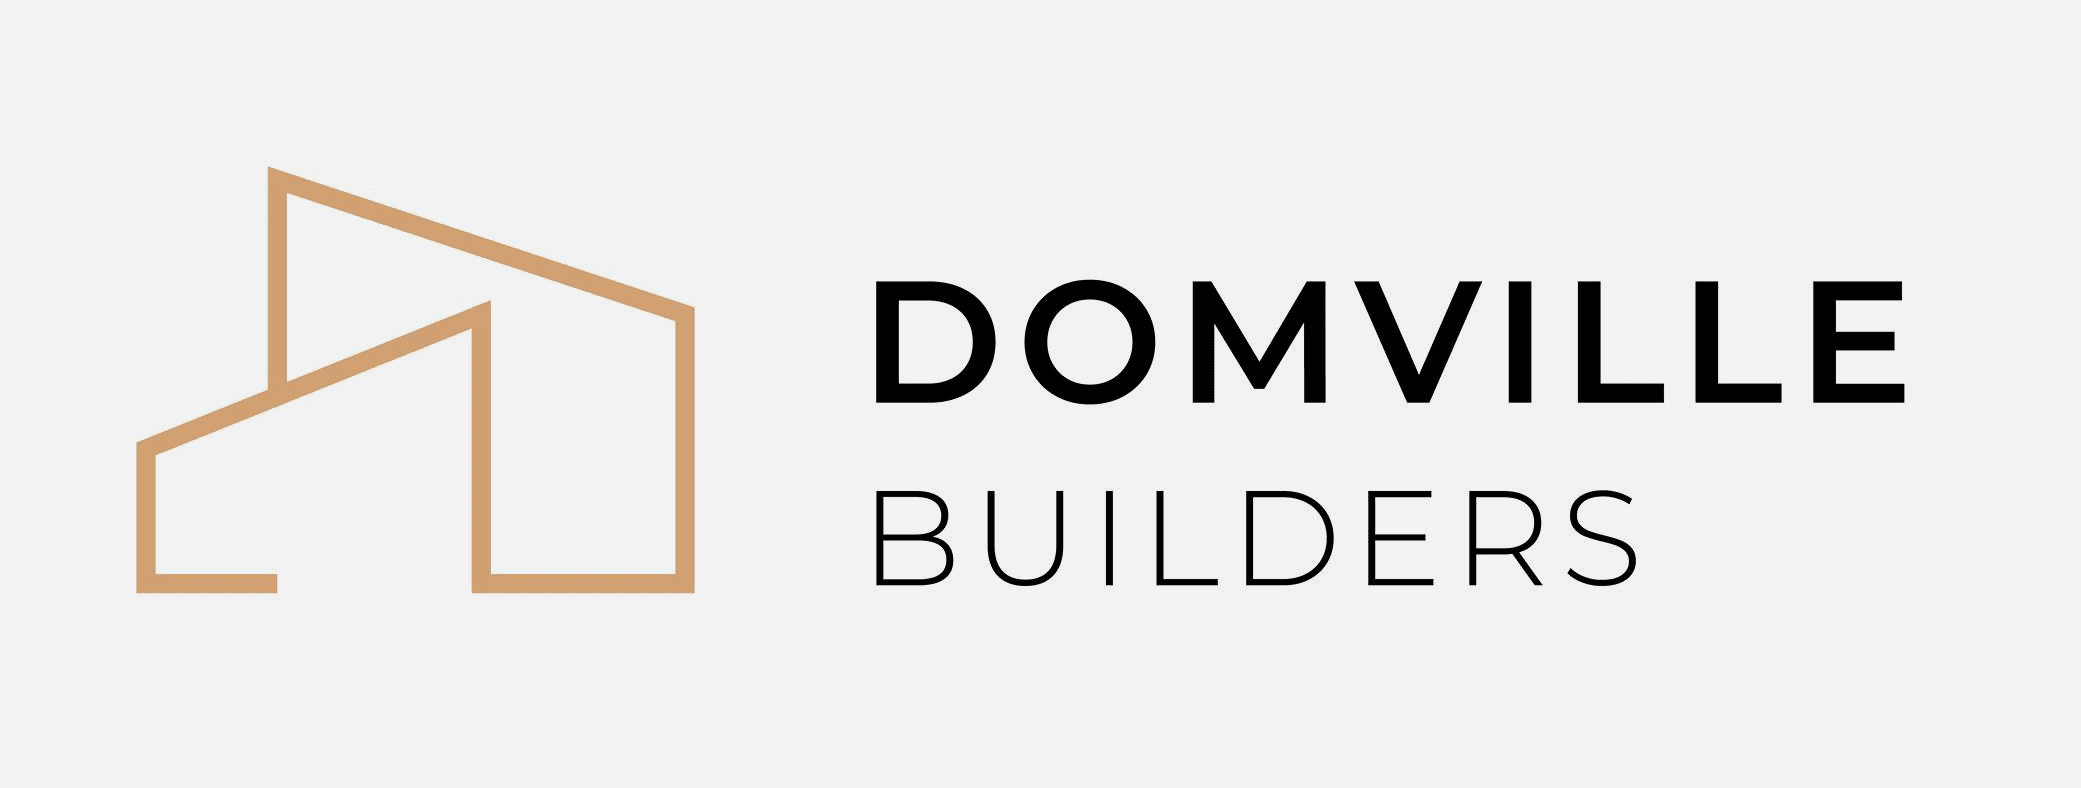 the logo for domville builders.